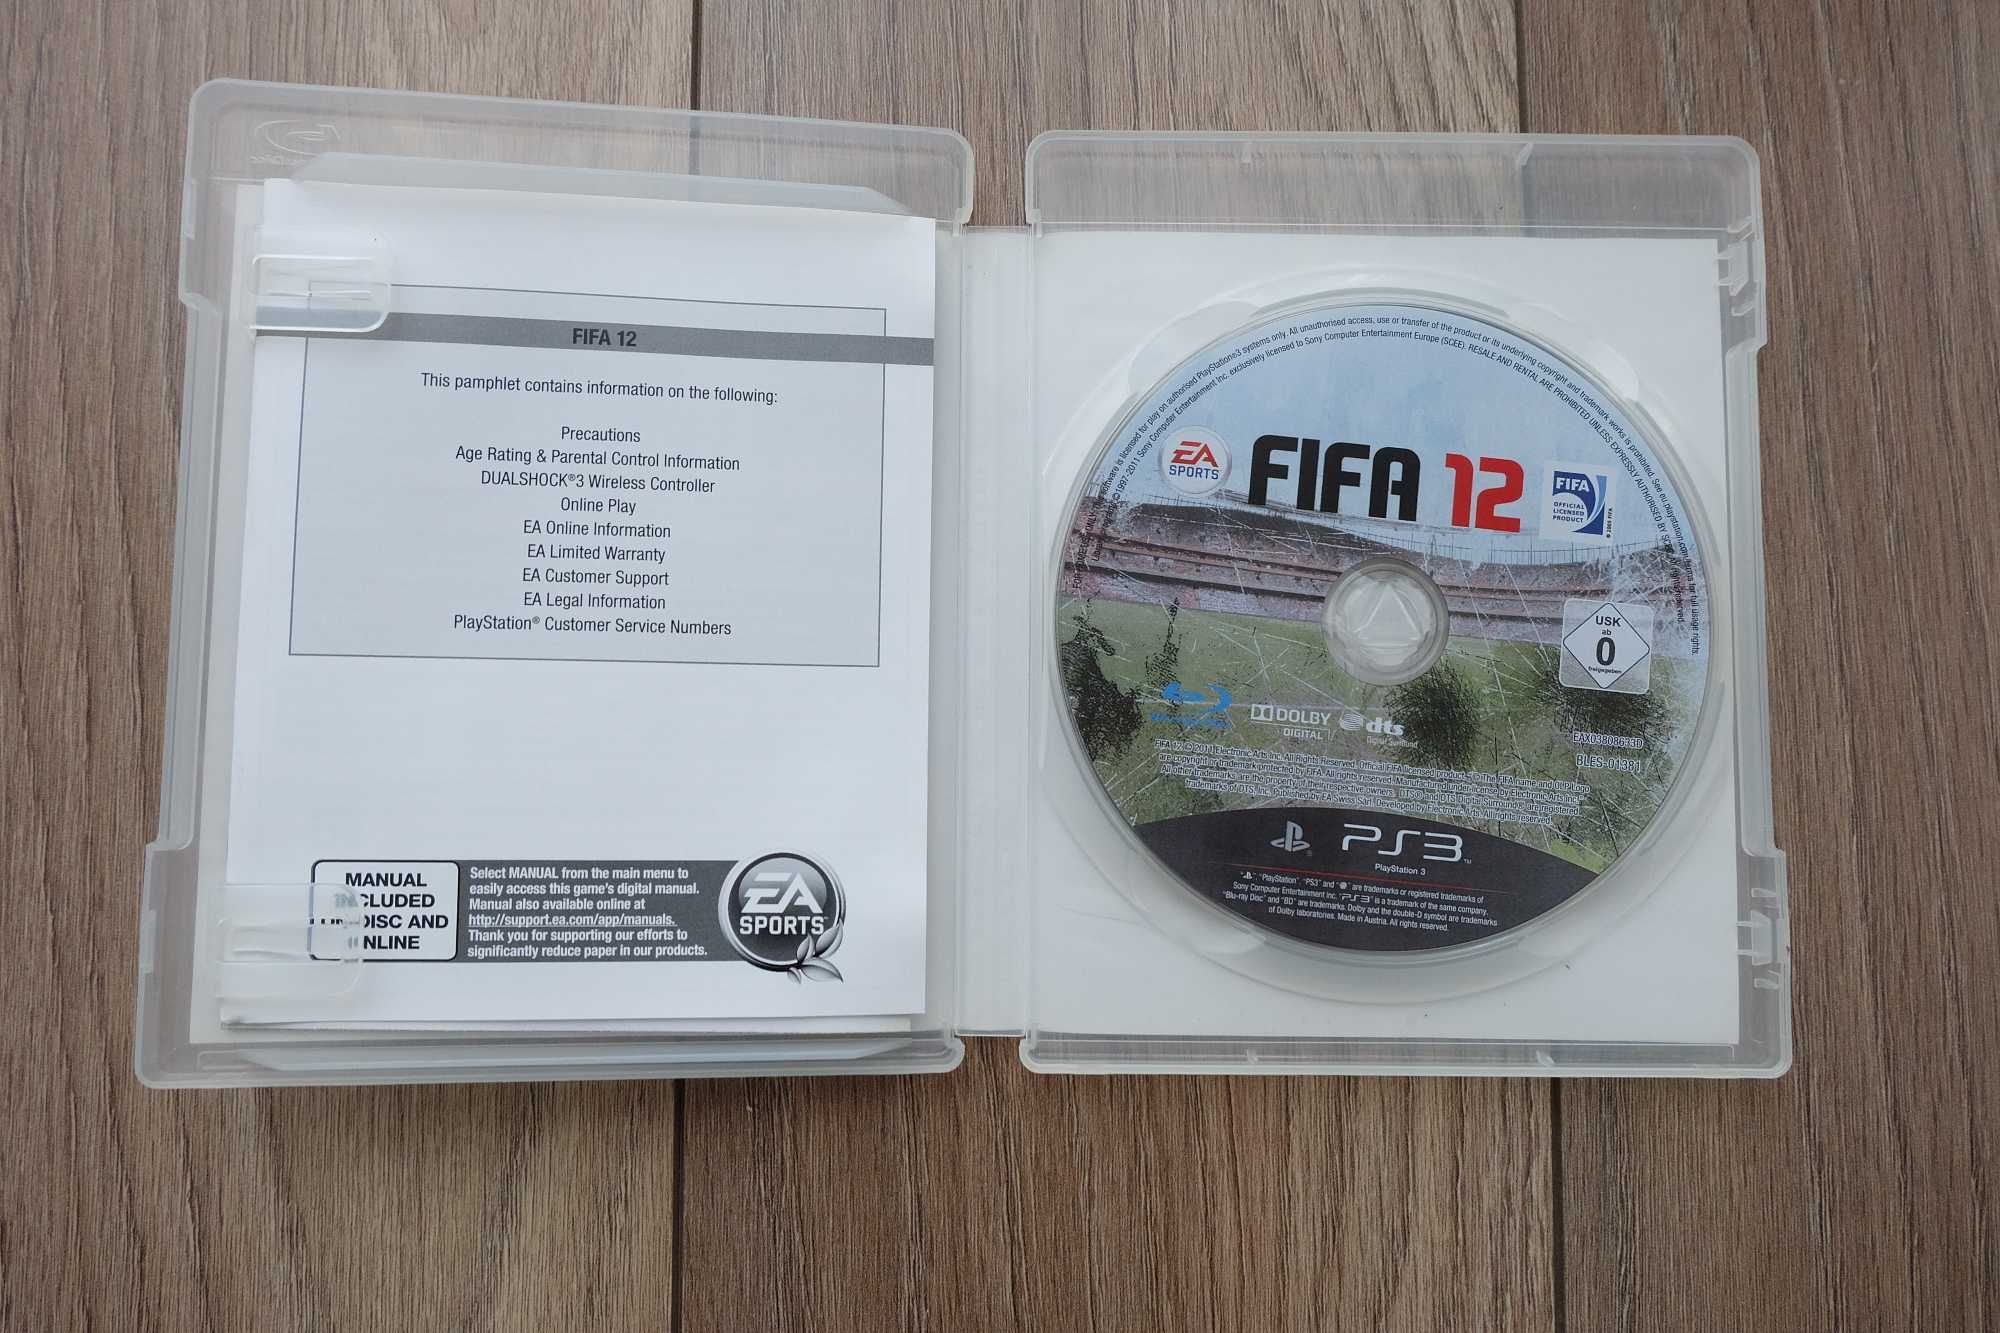 FIFA 12 PS3 - FIFA12 Special Edition